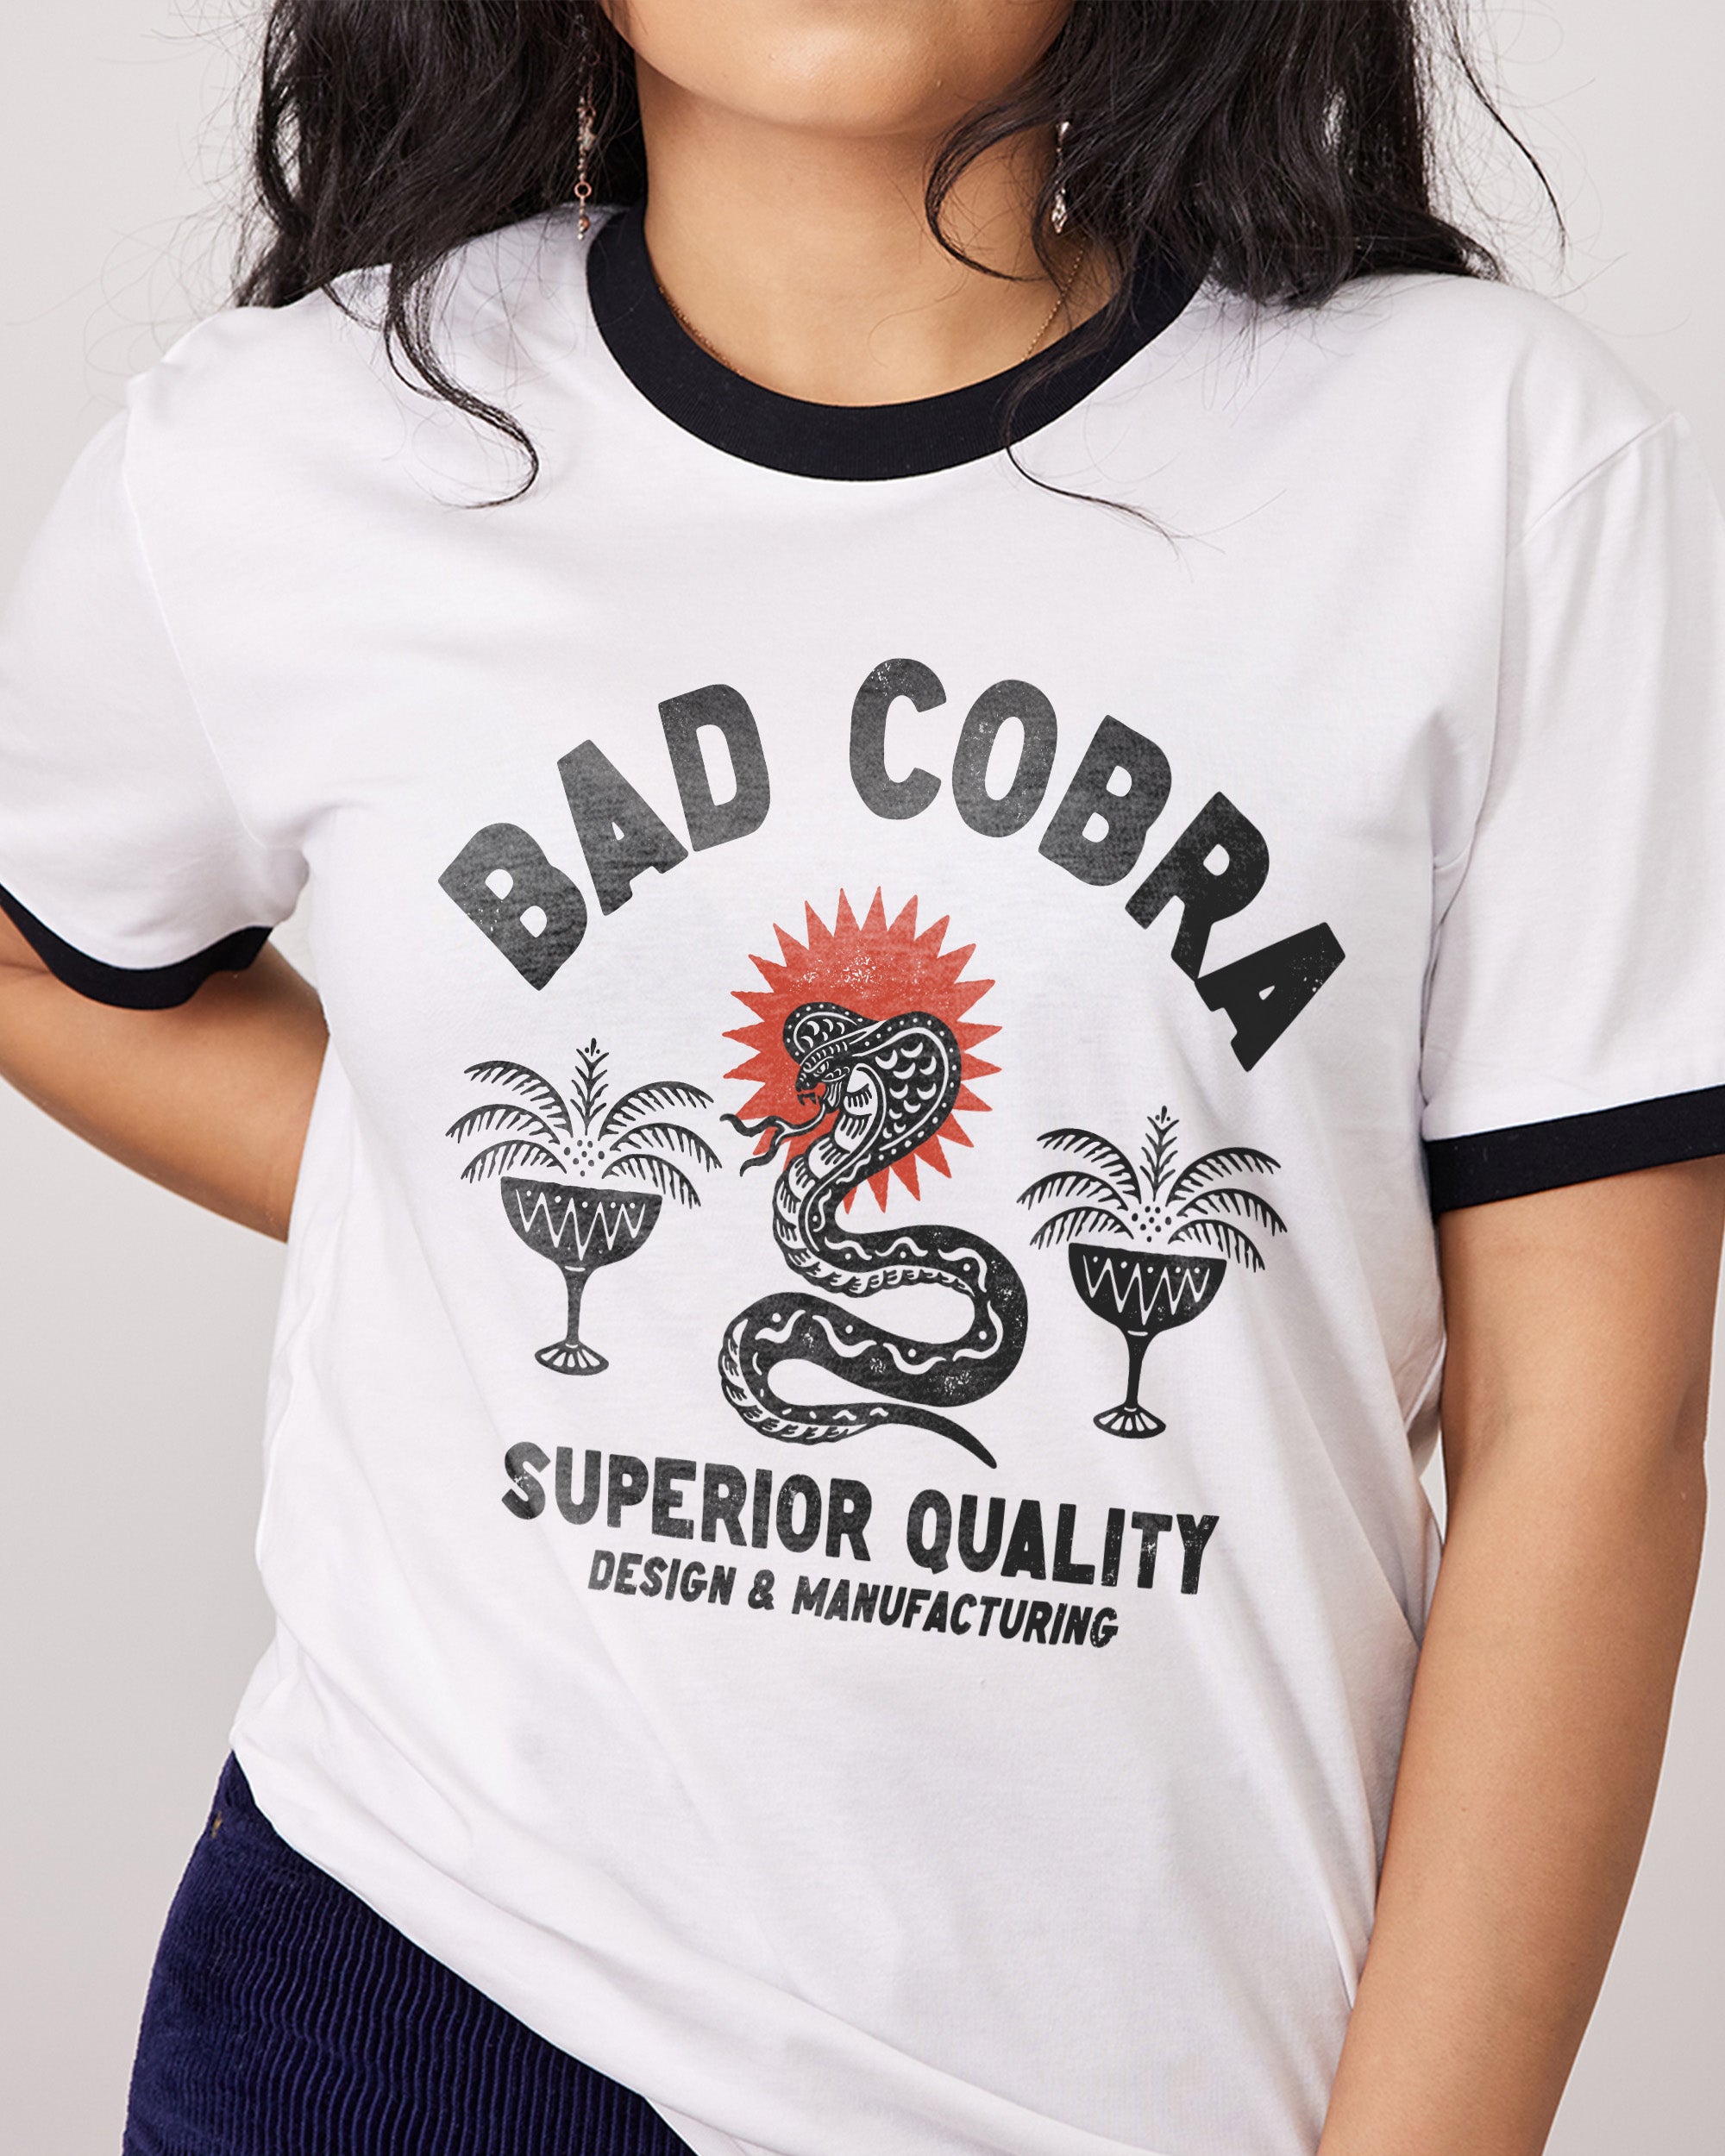 THE BAD COBRA T-Shirt